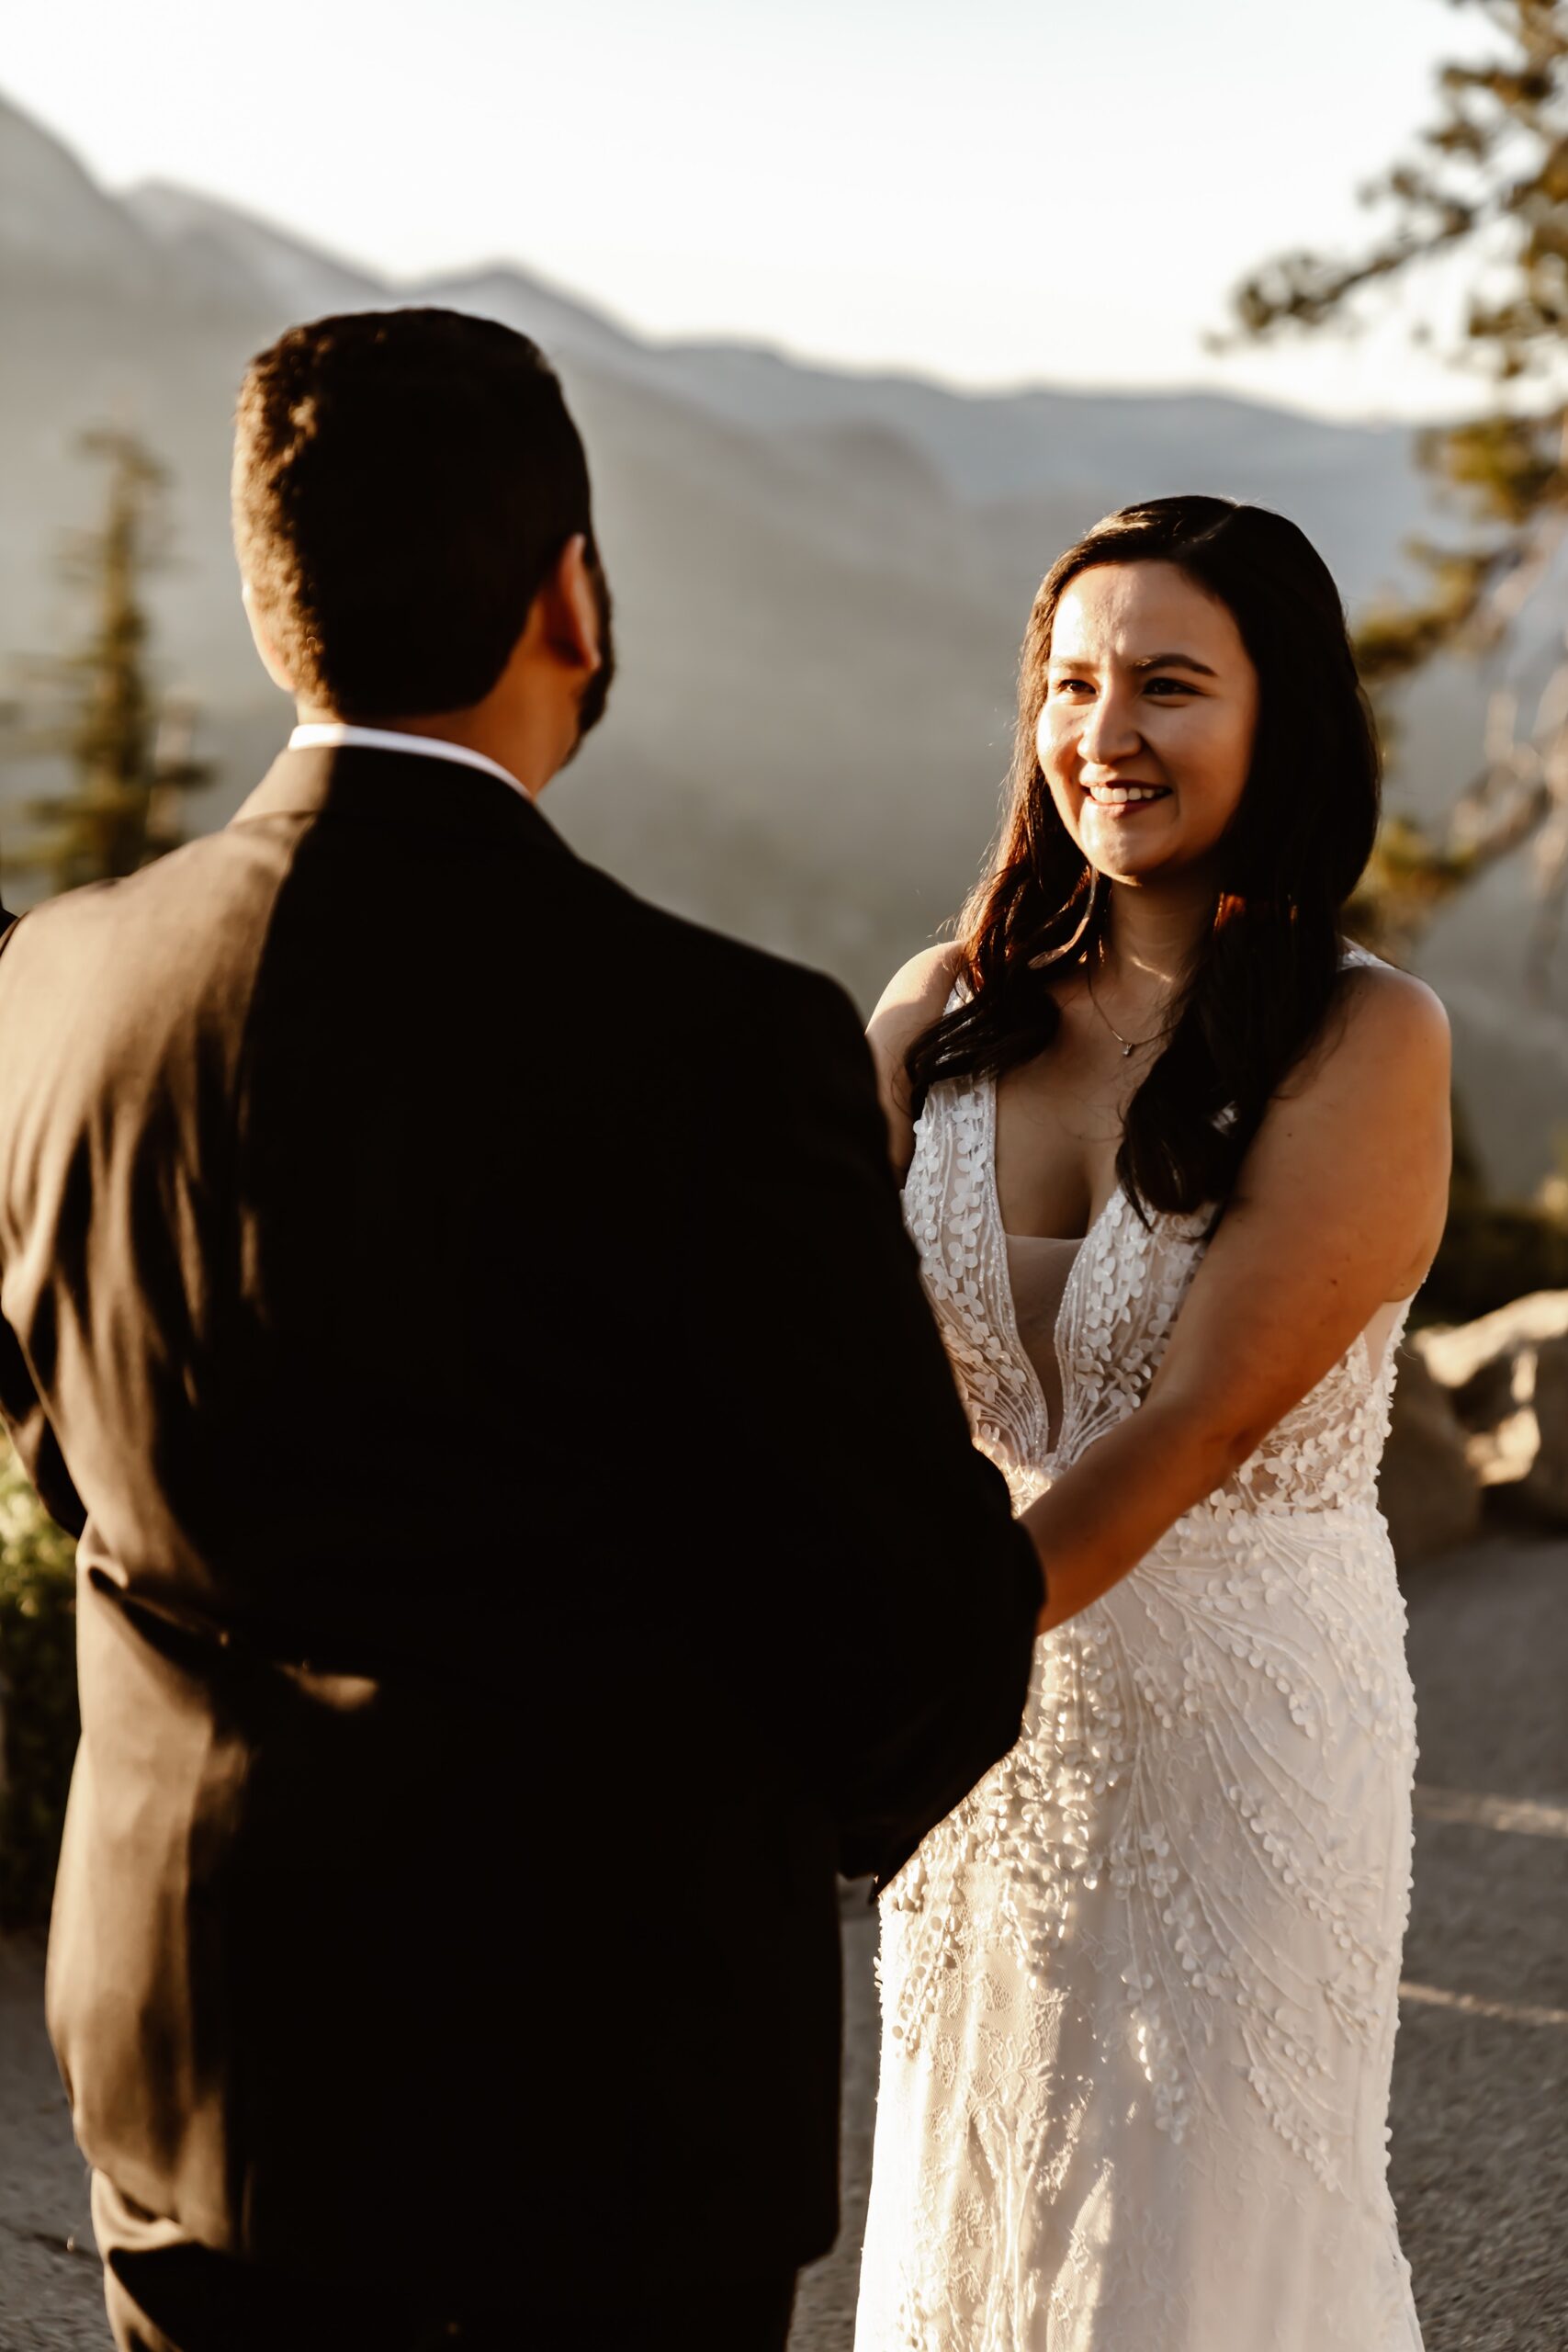 Bride smiles at groom during wedding ceremony in Yosemite